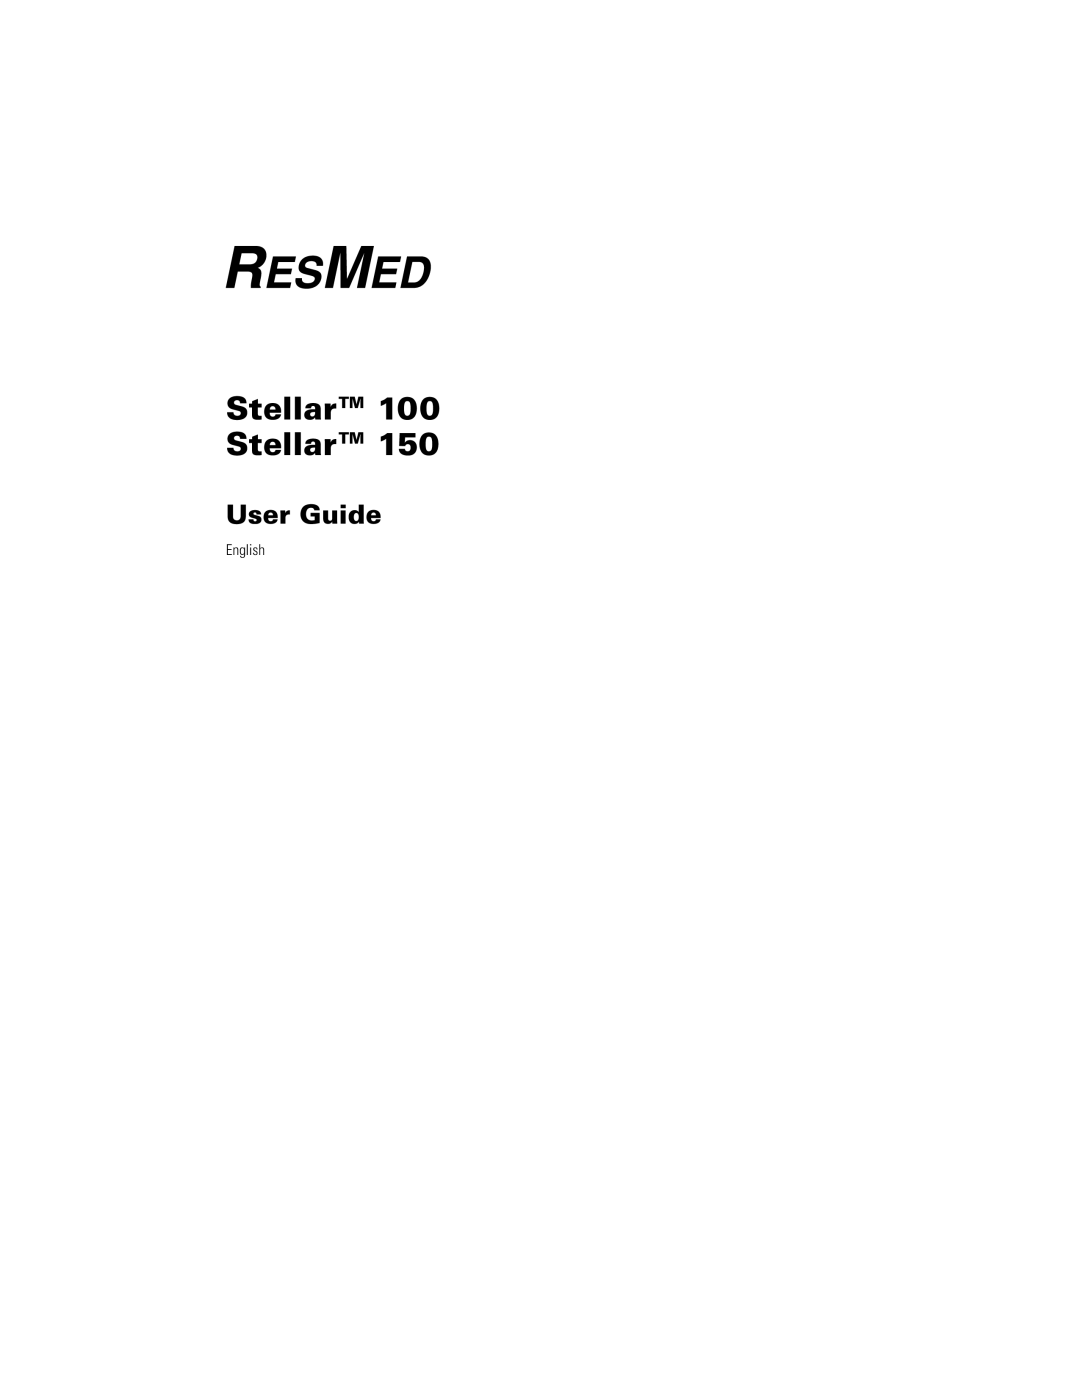 ResMed 2011-09, 248551/1 manual Stellar 100 Stellar, User Guide 